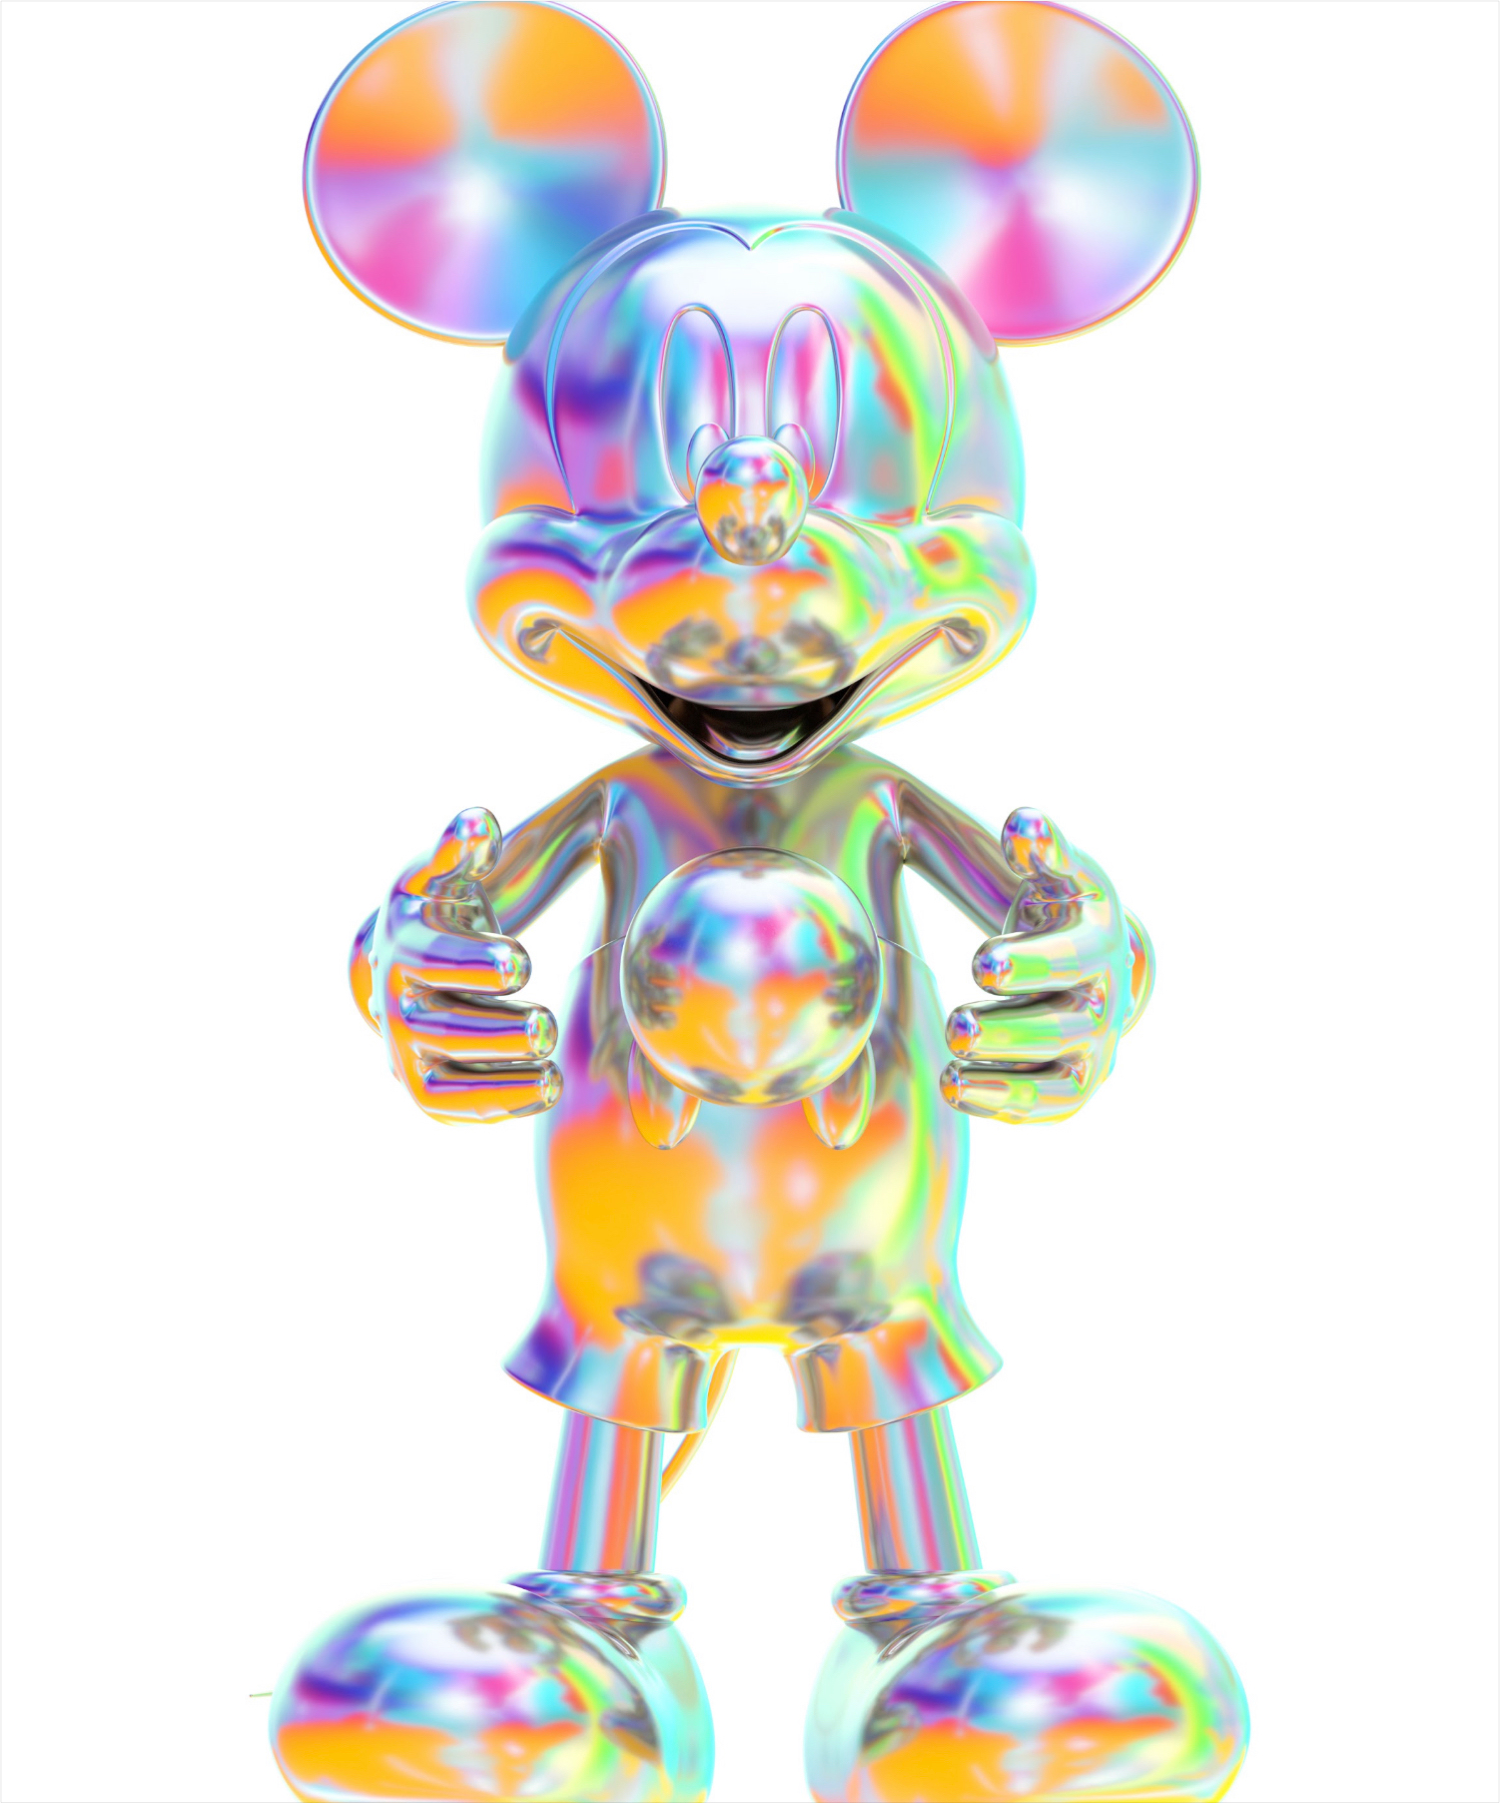 Mikey mouse now-future edition Sofubi | tradexautomotive.com